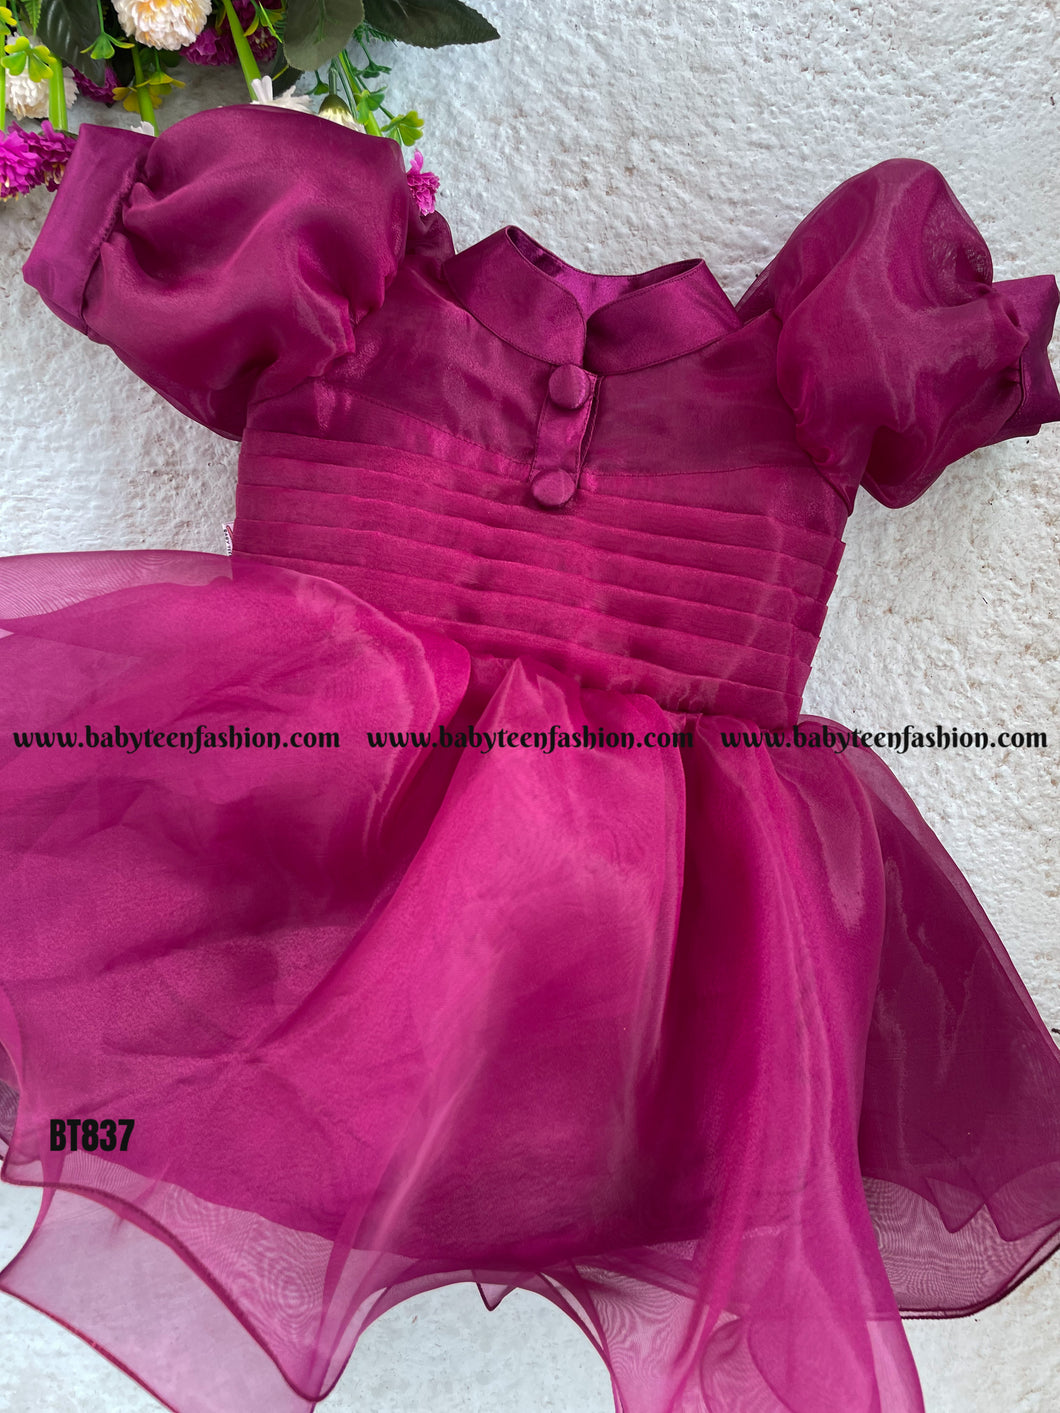 BT837 Baby Magic - Elegant Baby Occasion Dress